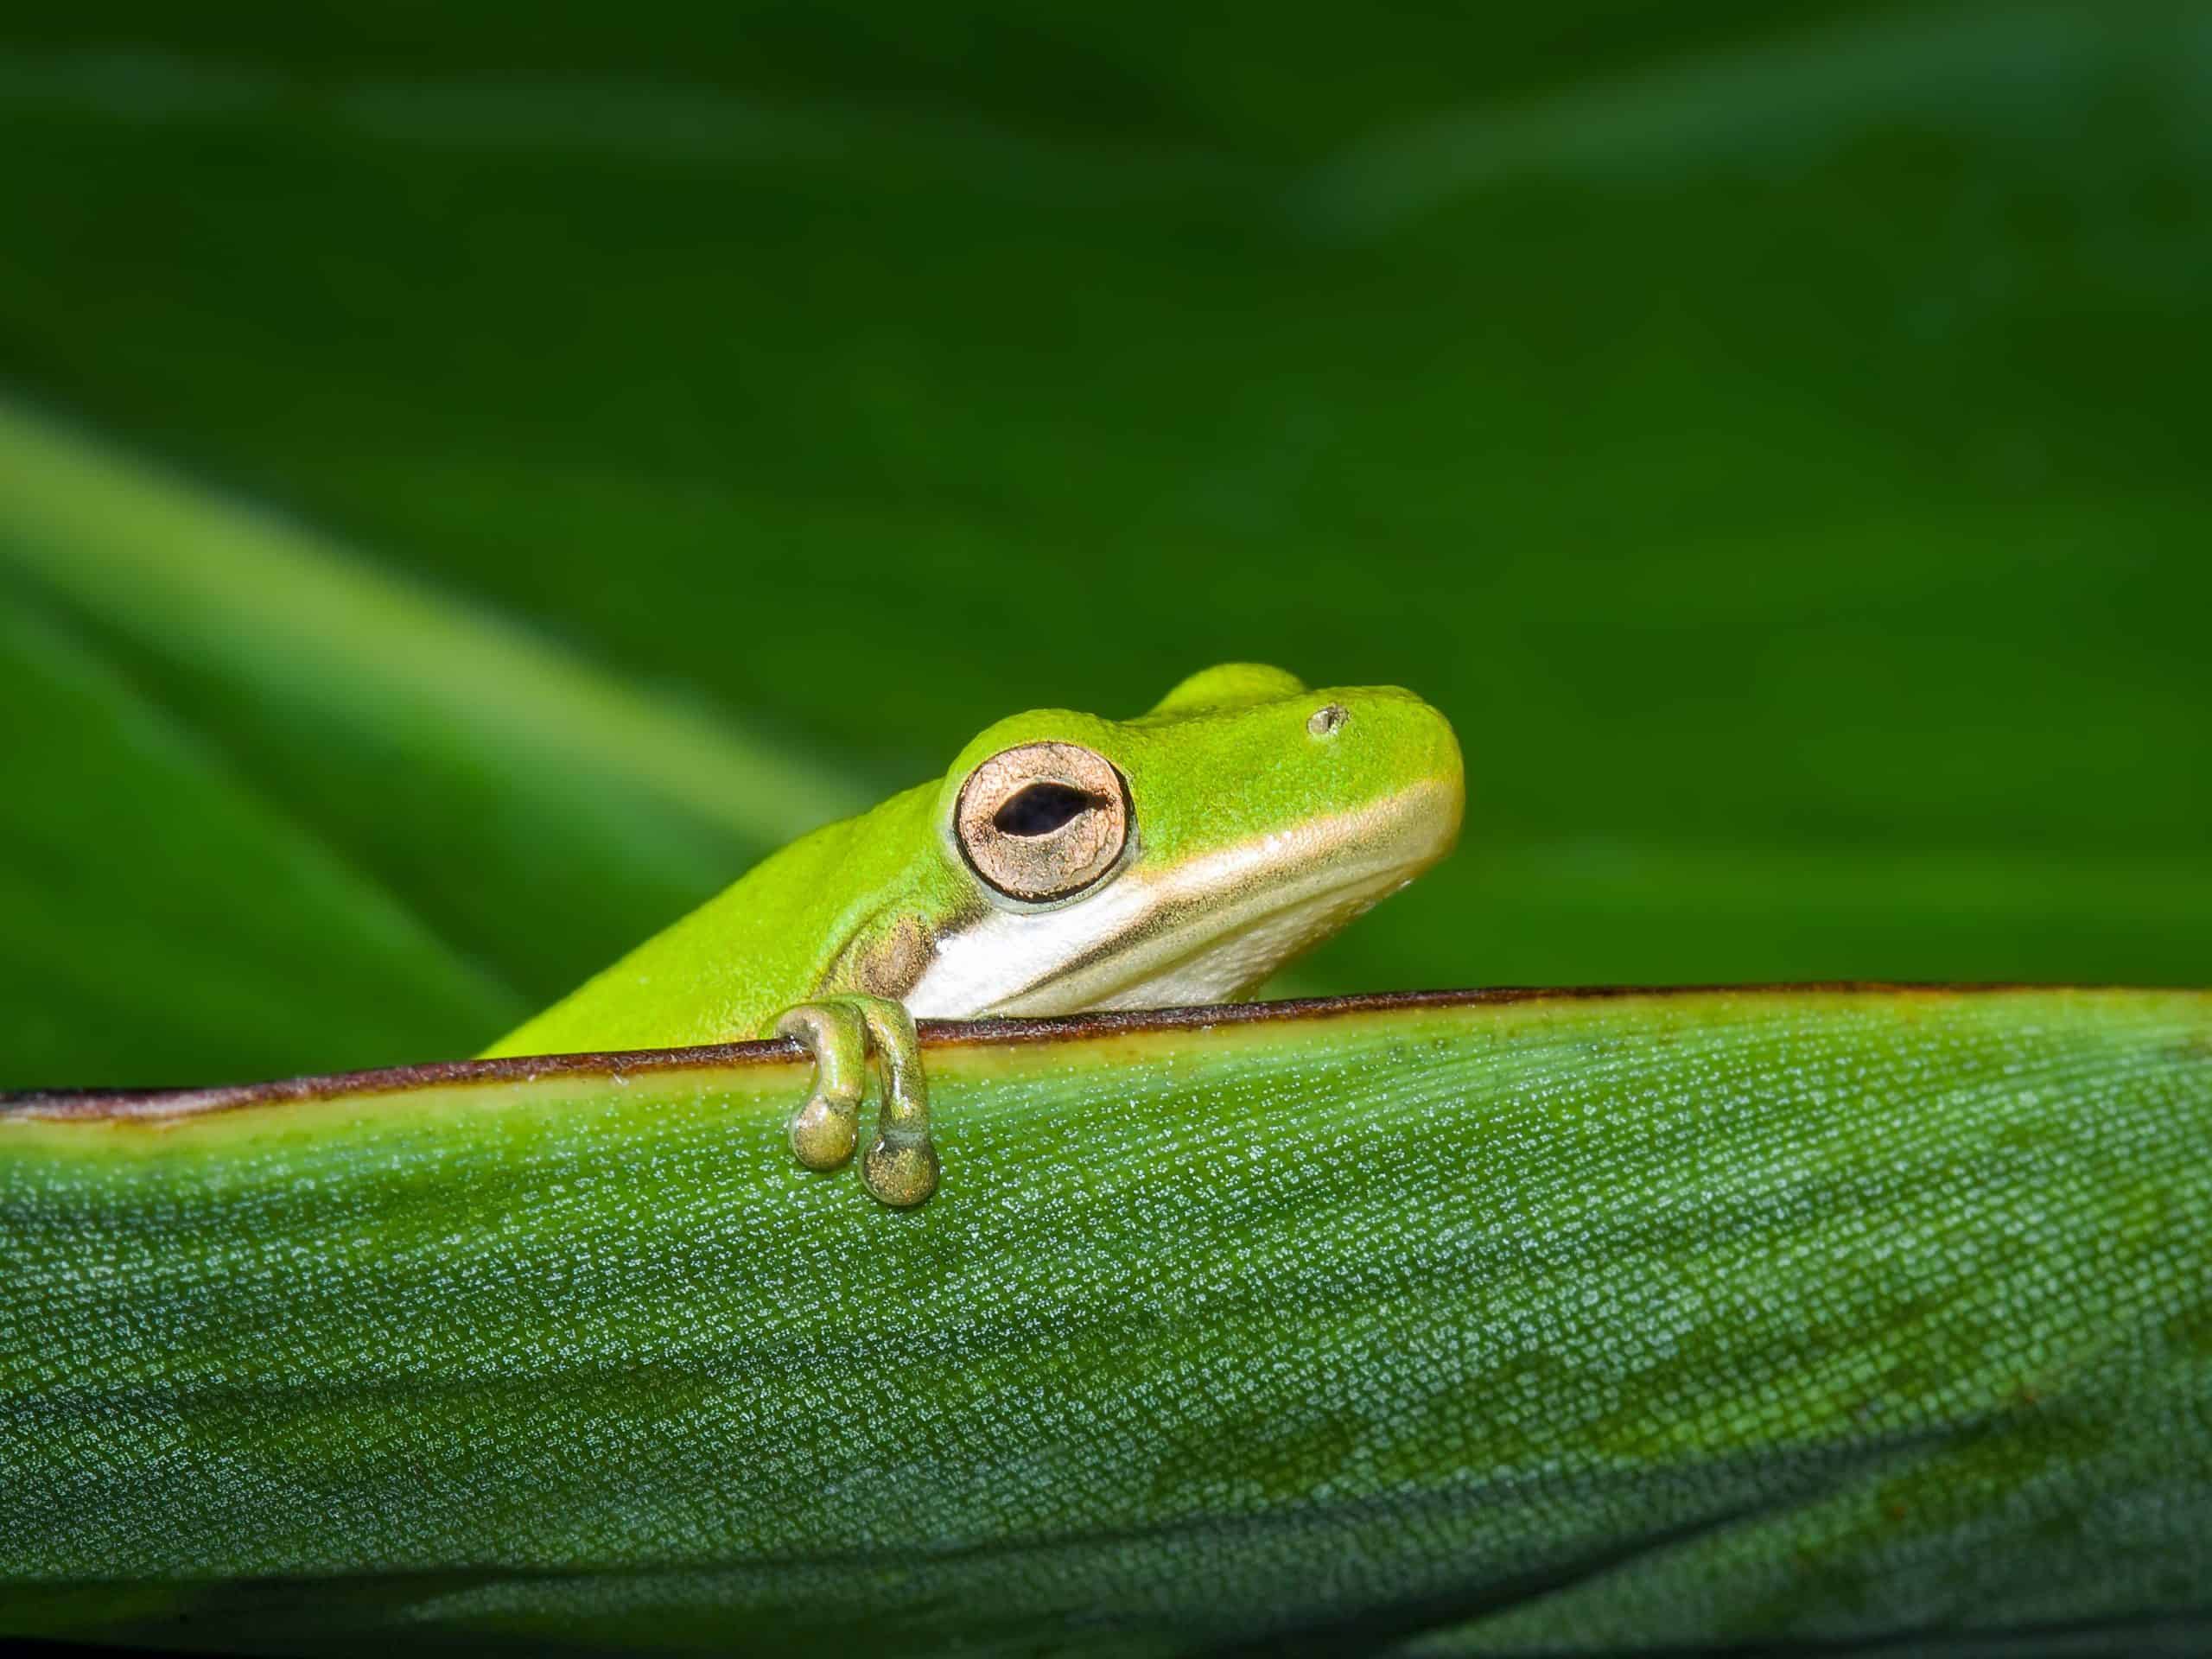 American green tree frogs